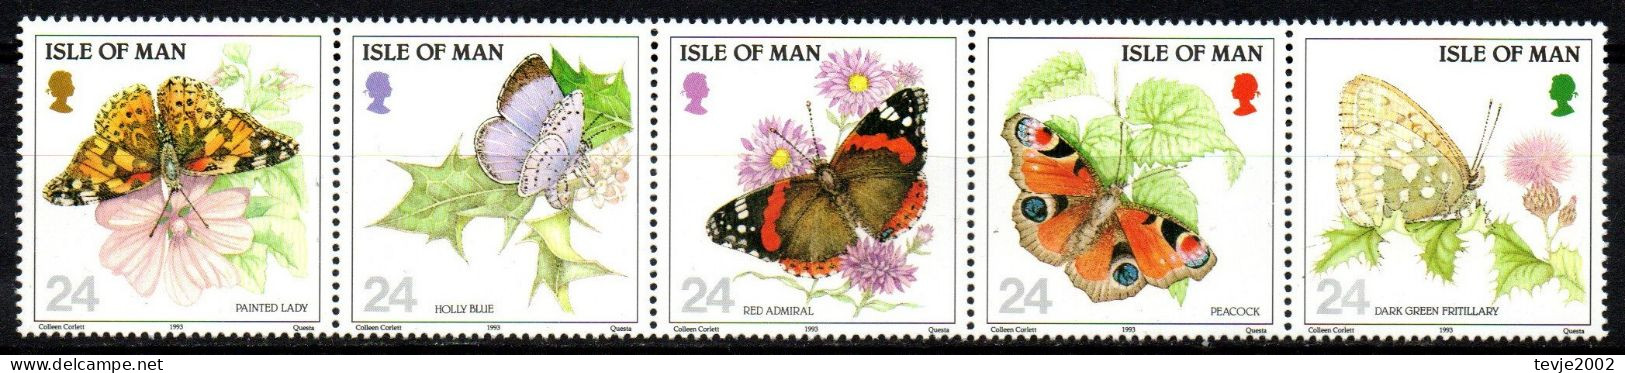 Isle Of Man 1993 - Mi.Nr. 555 - 559 - Postfrisch MNH - Tiere Animals Schmetterlinge Butterflies - Schmetterlinge